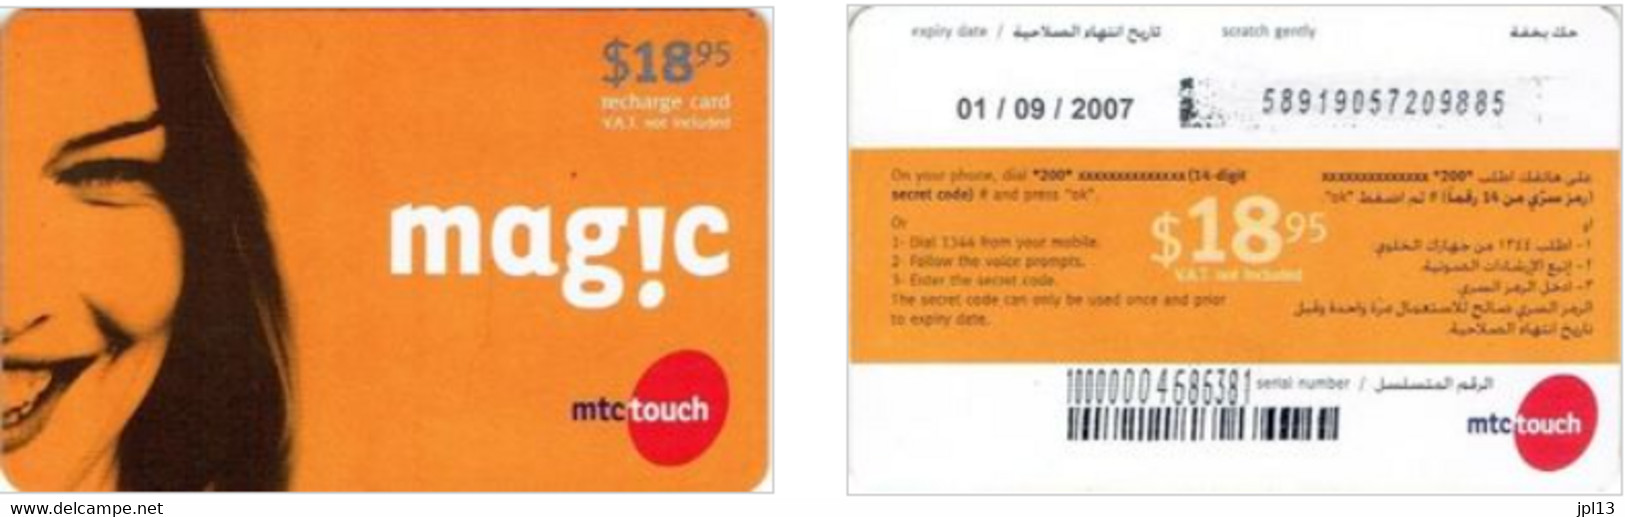 Recharge GSM - Liban - MTC Touch - Magic - Woman $18,95, Exp. 13/05/2007 - Libanon